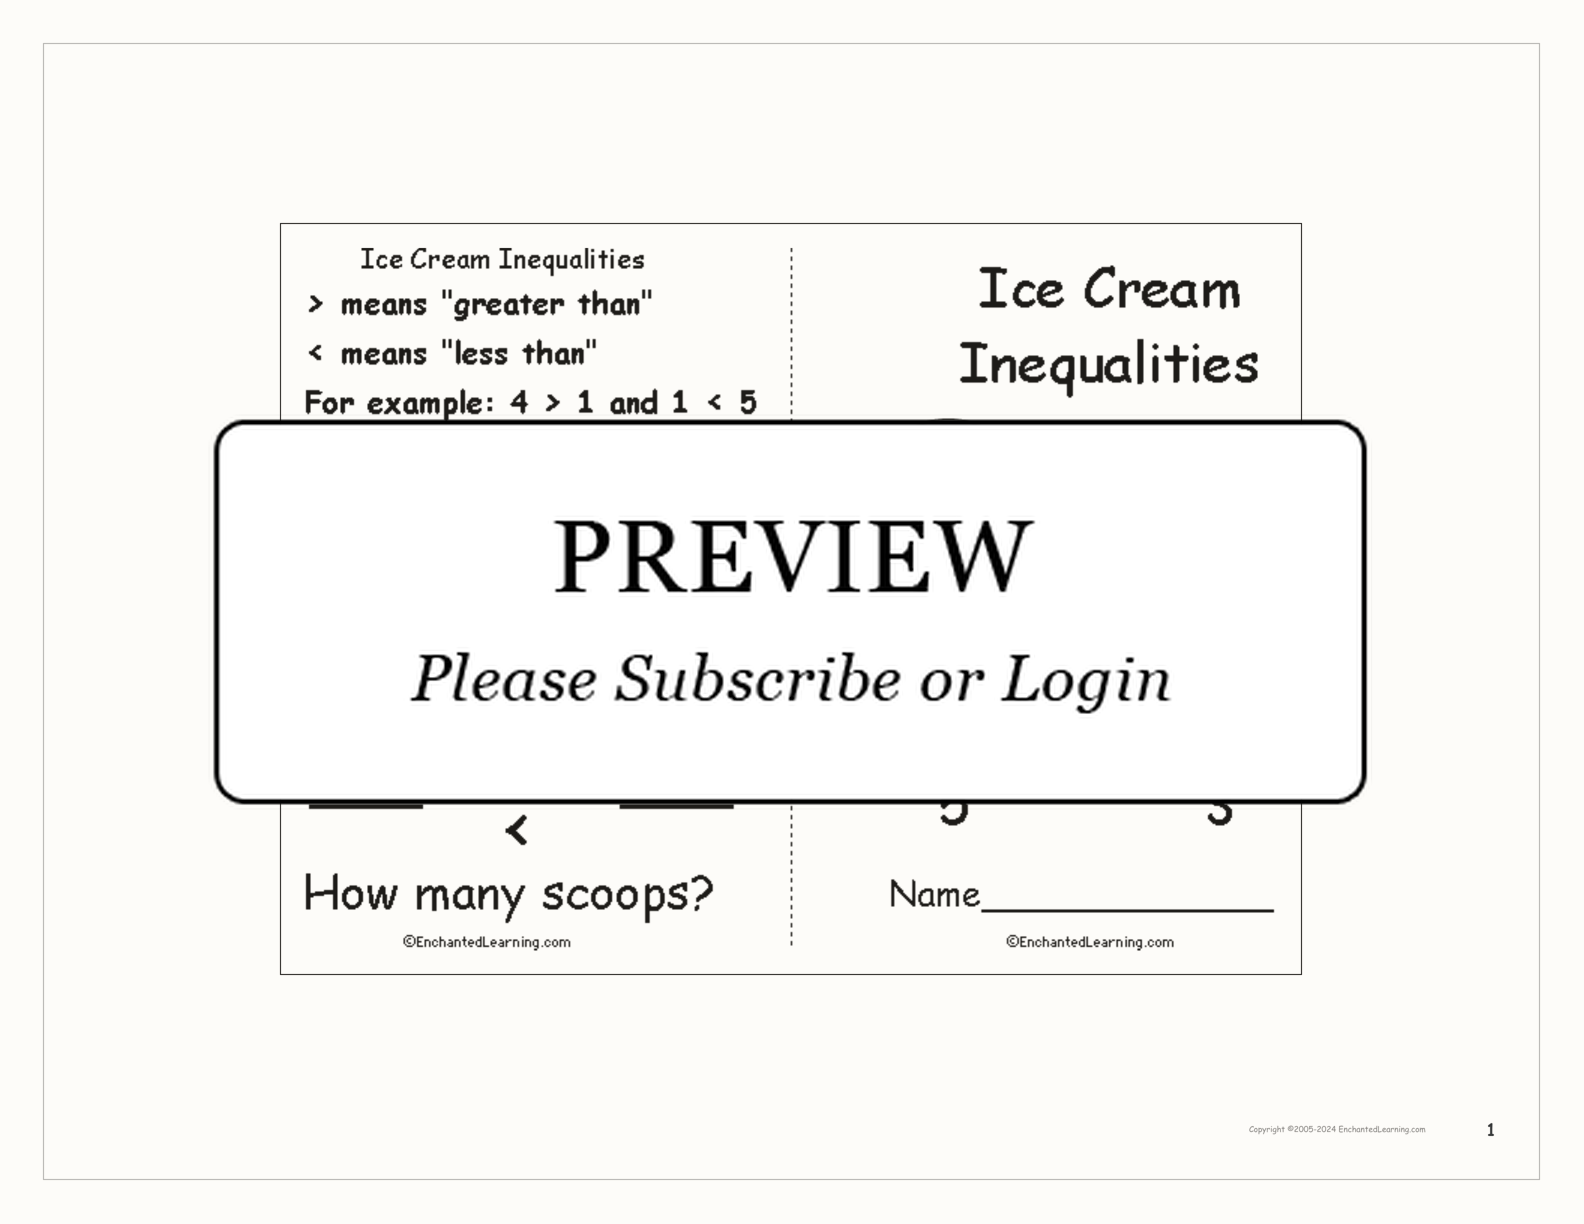 Ice Cream Inequalities Book interactive worksheet page 1